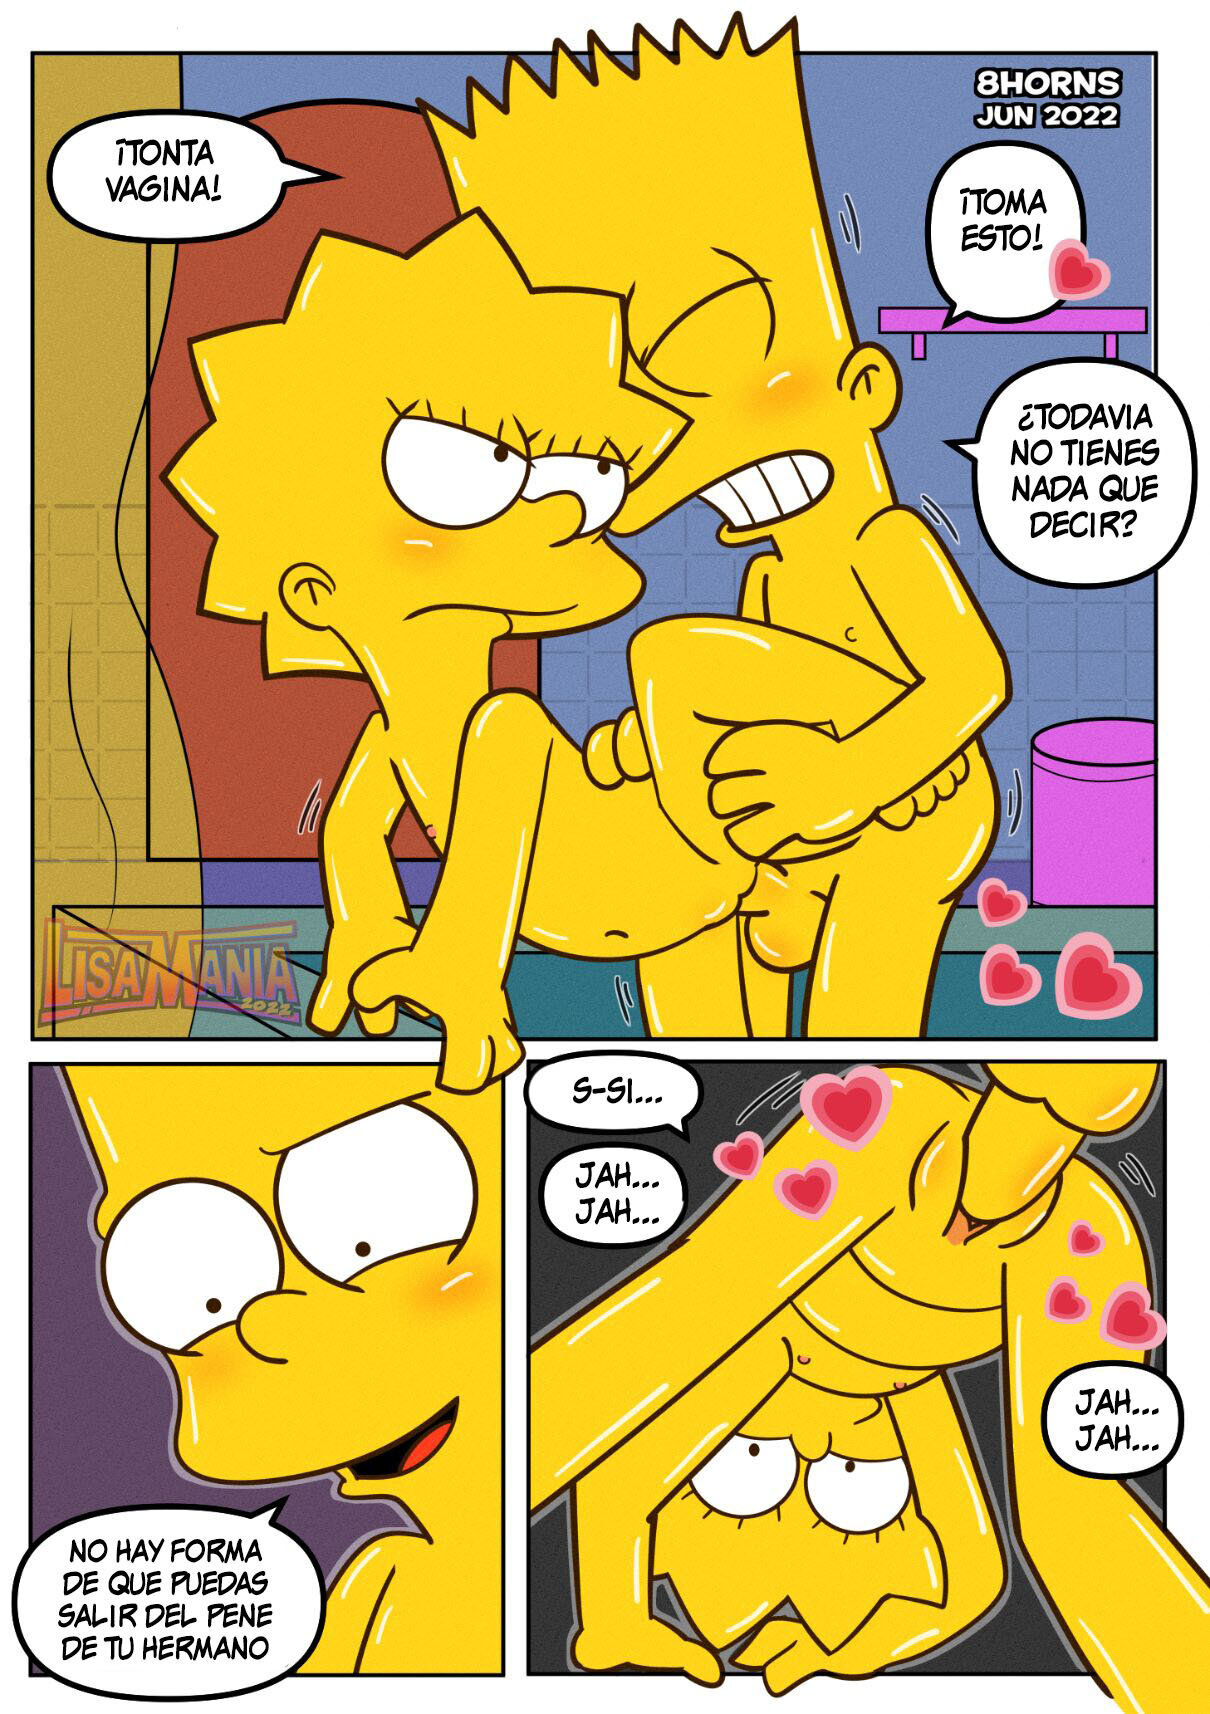 That's Not Fair, Is It! (ver. Simpsons) - 14